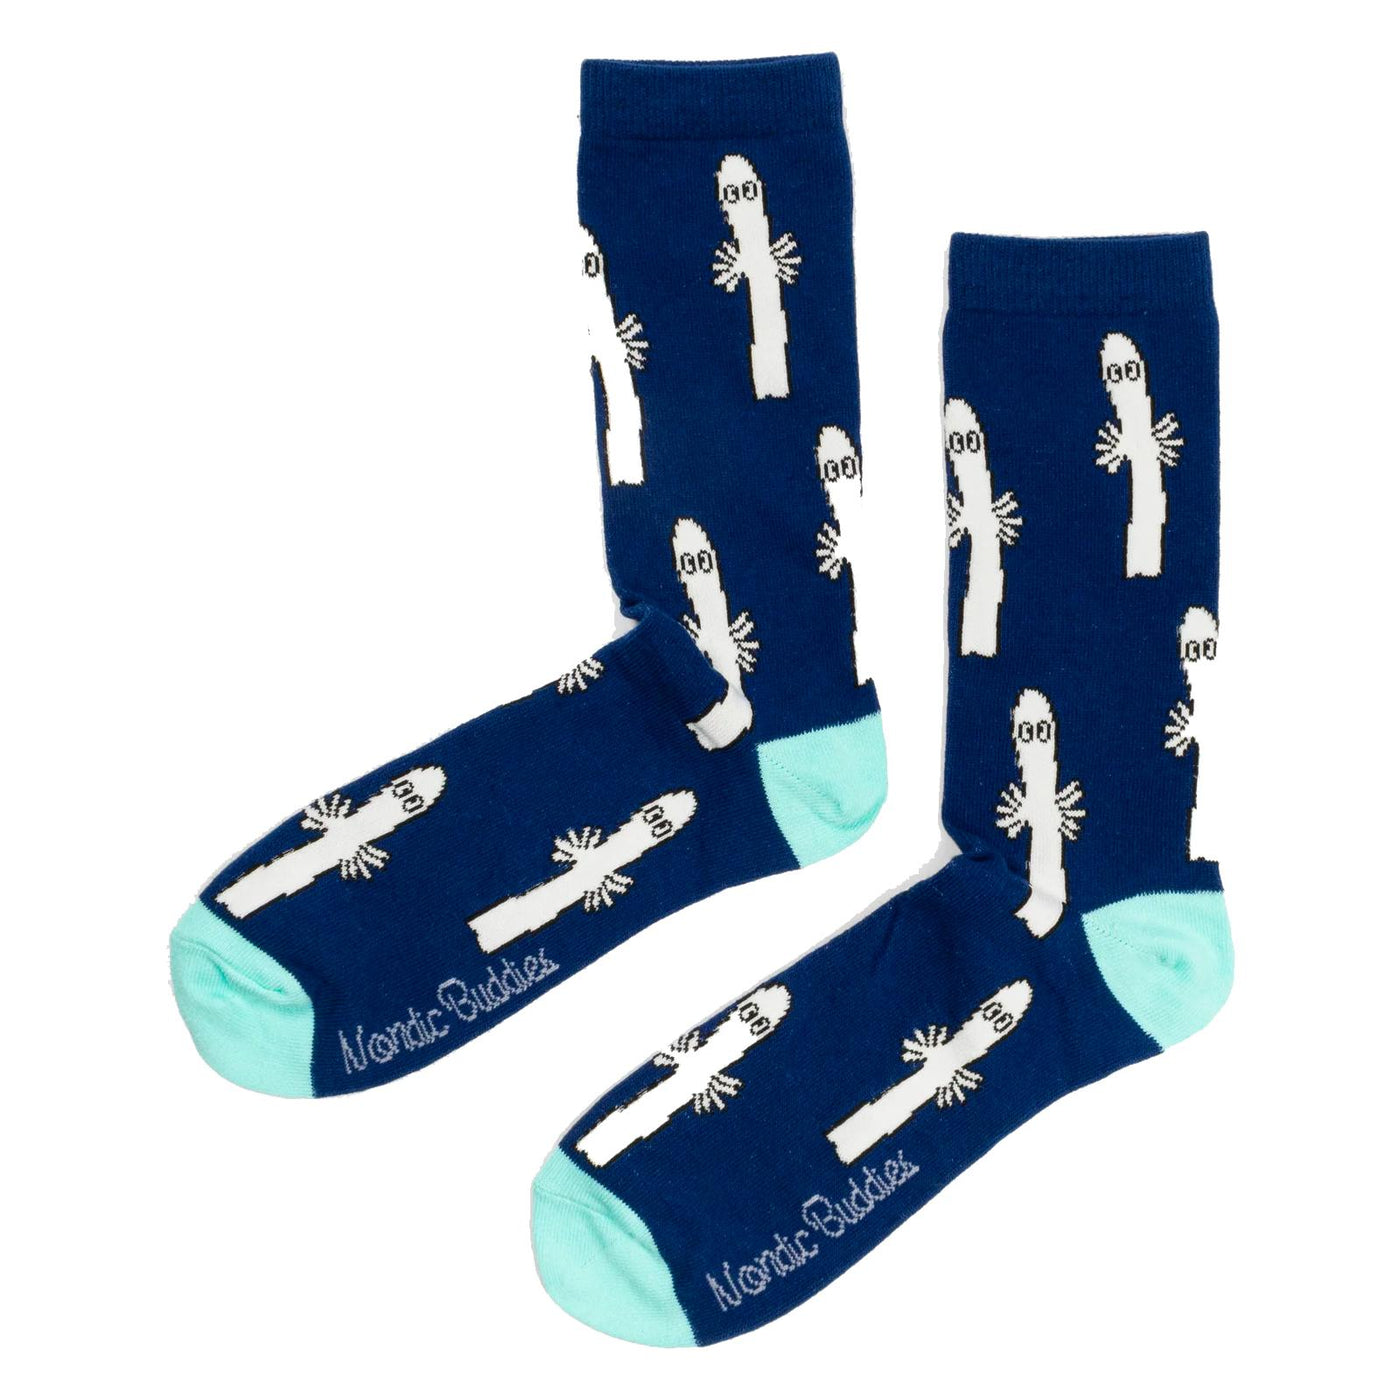 Moomin Hattivatit socks blue